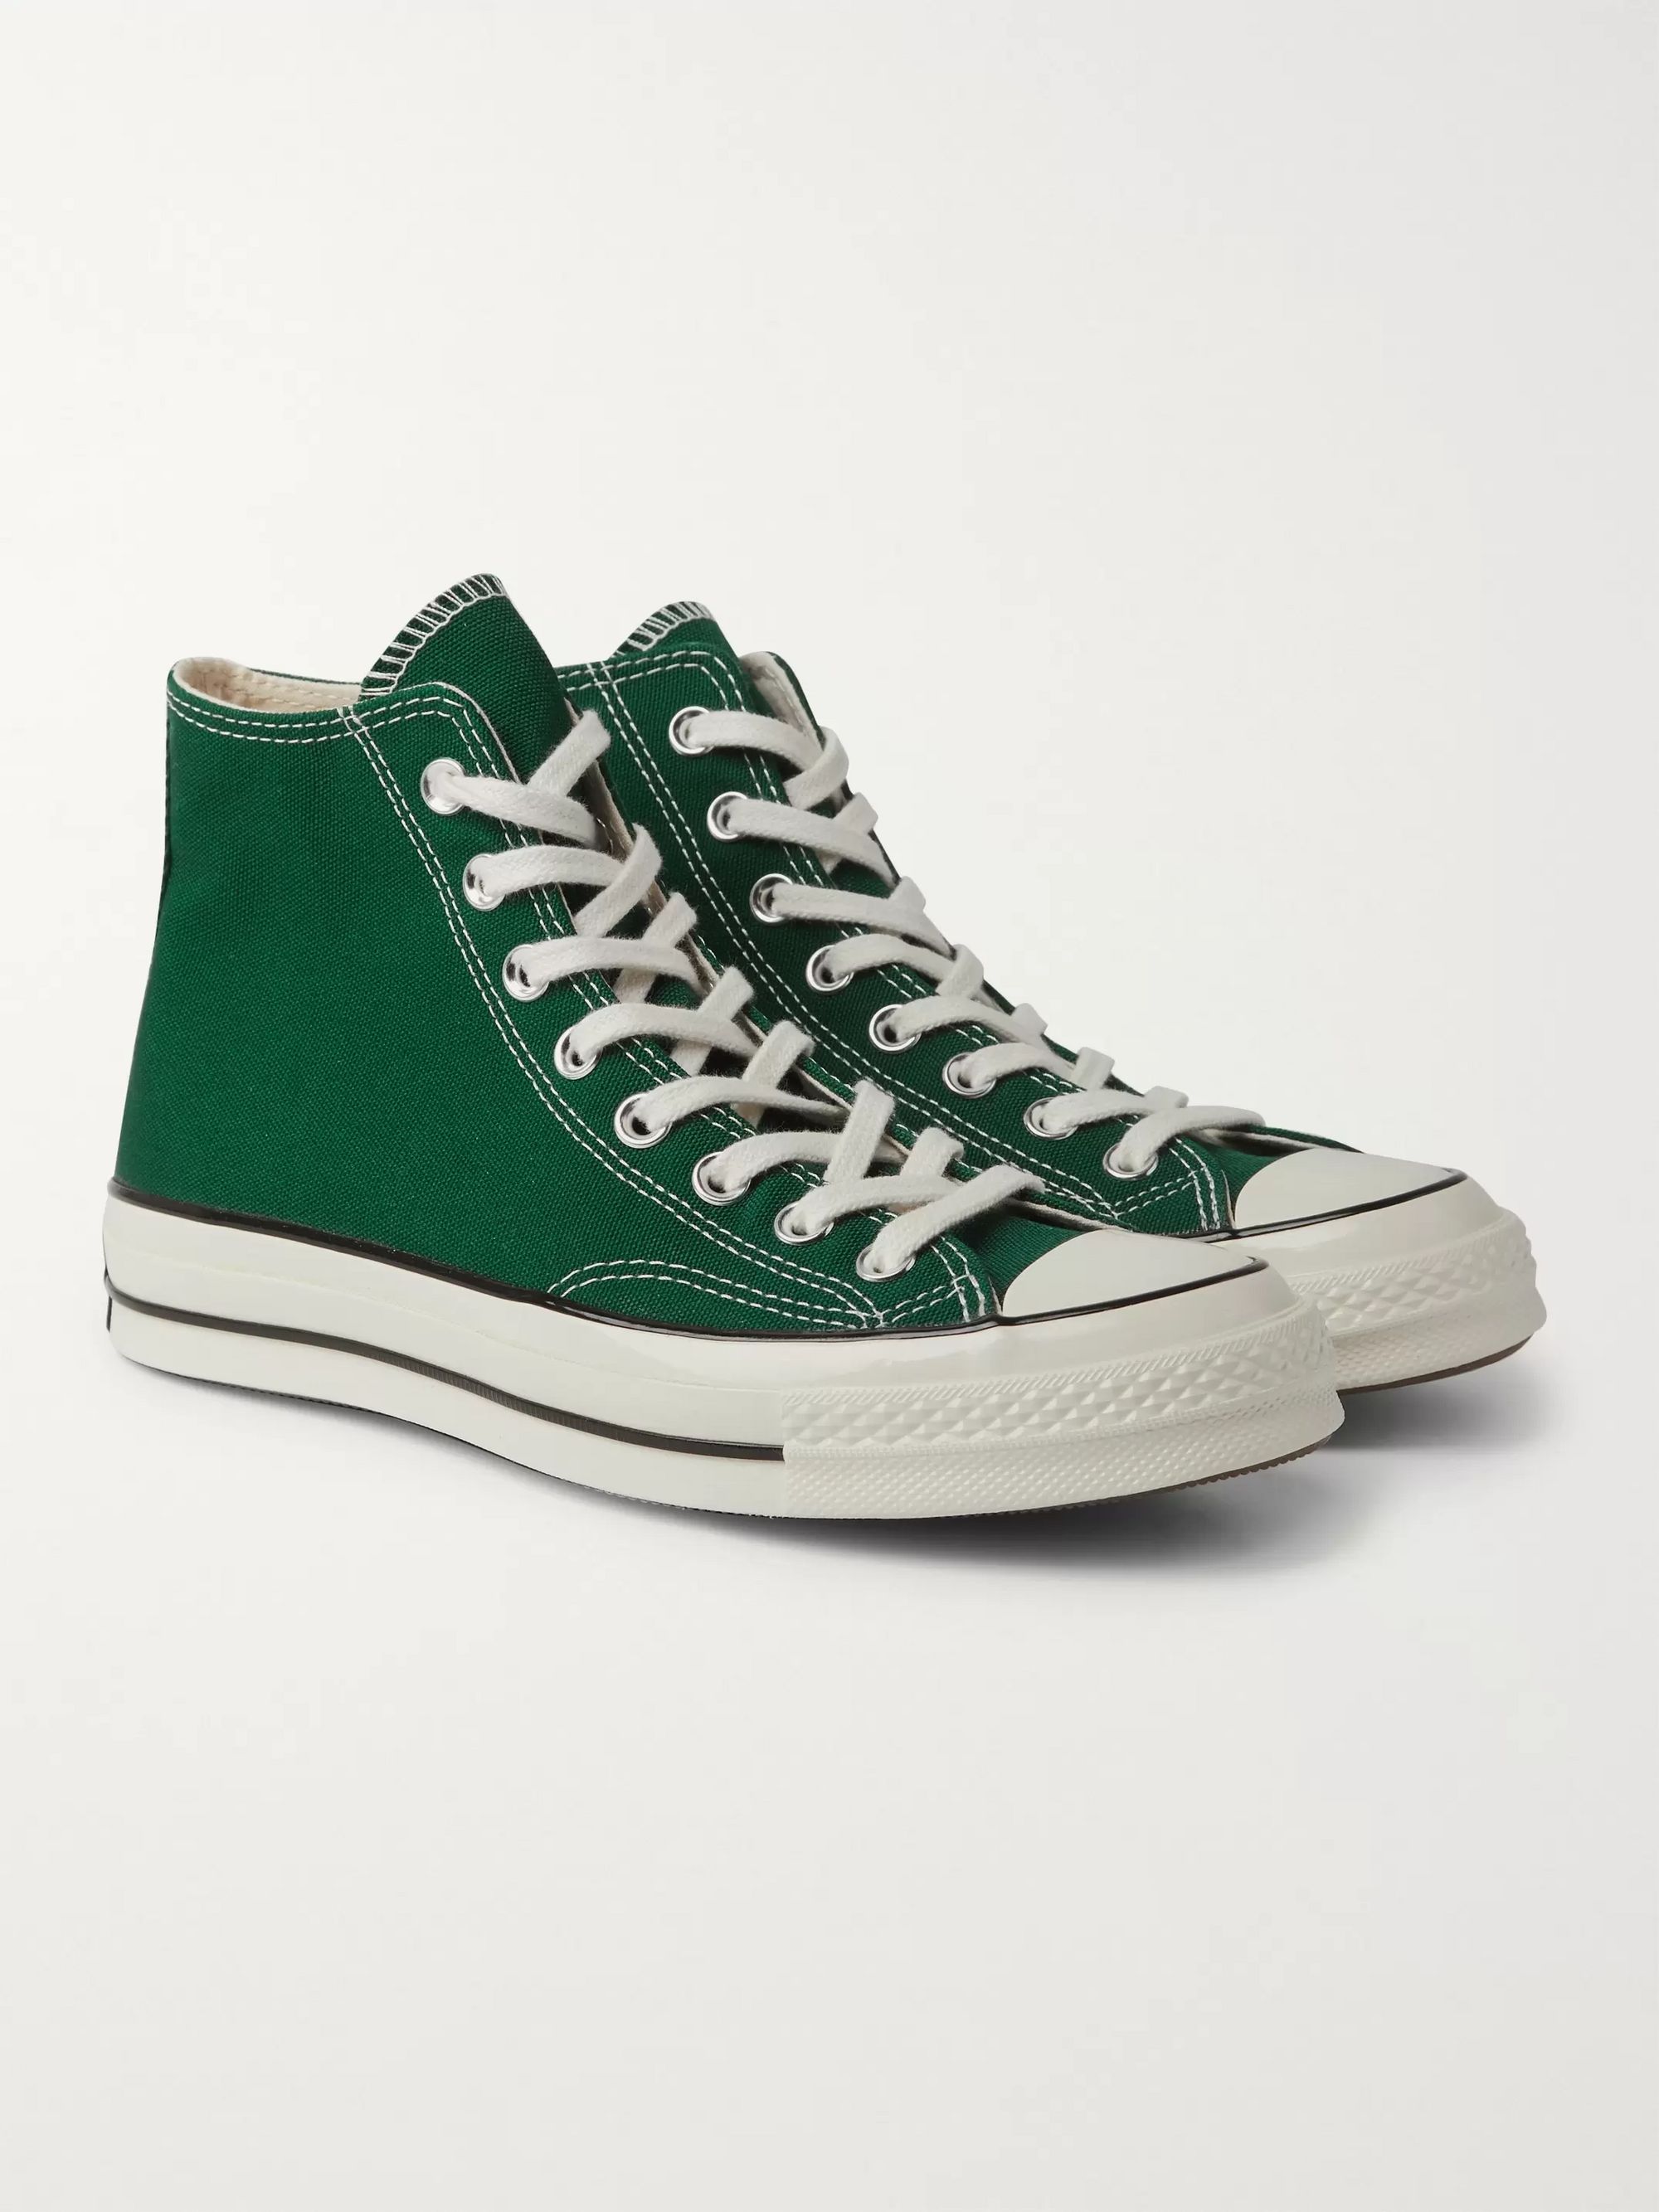 Green Chuck 70 Canvas High-Top Sneakers 